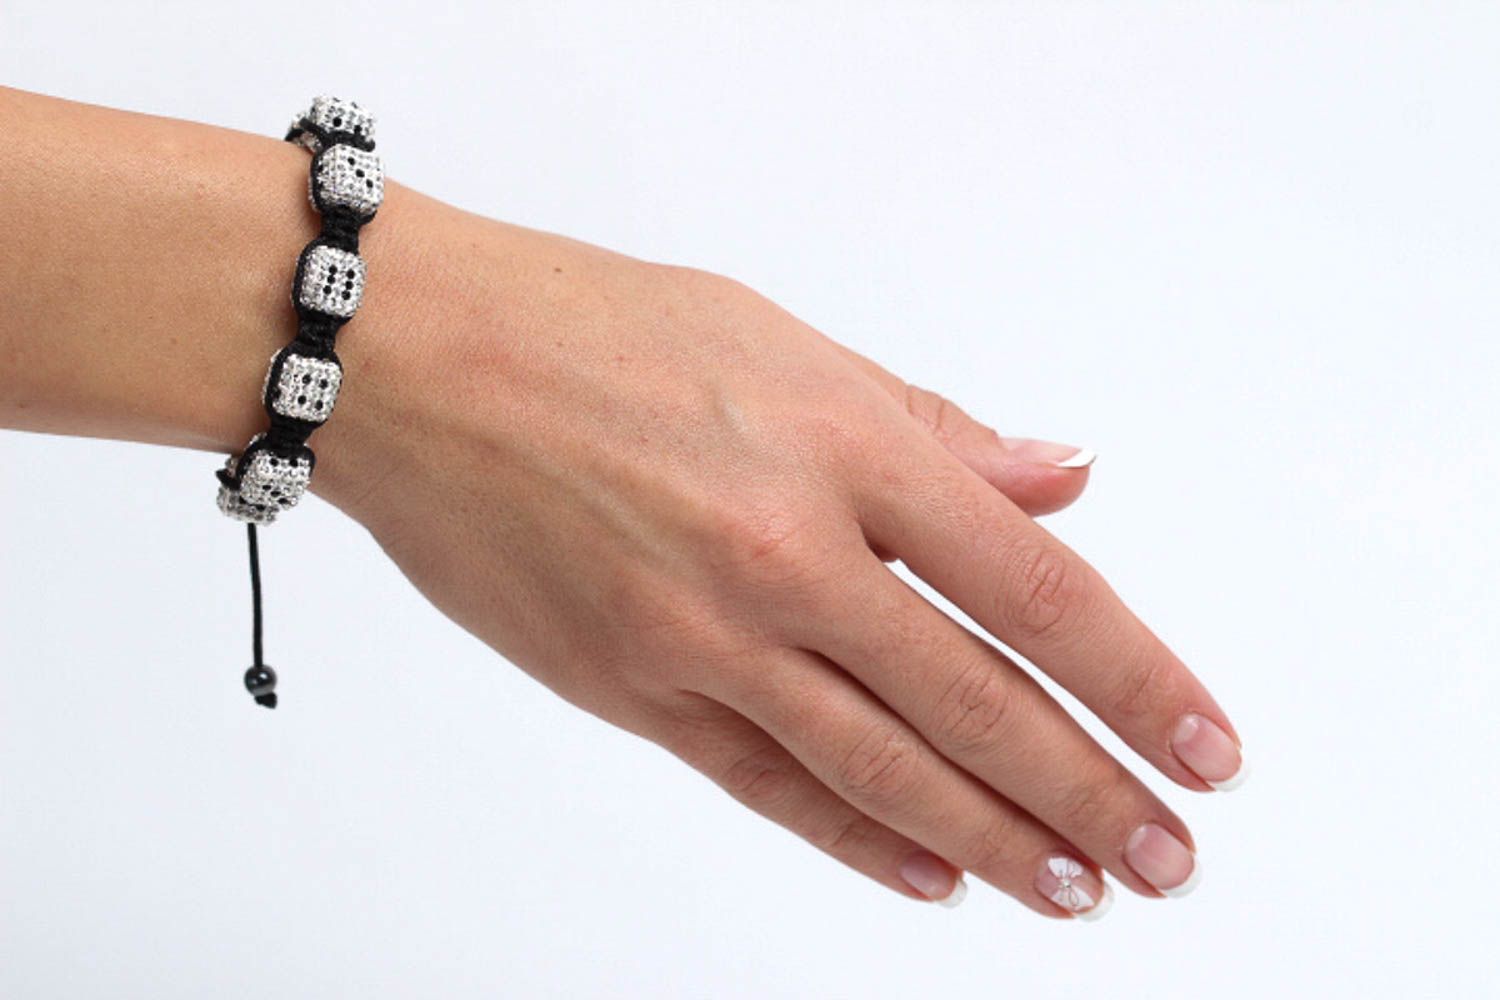 Woven bracelet handmade beaded bracelet with stylish evening jewelry for girls photo 4